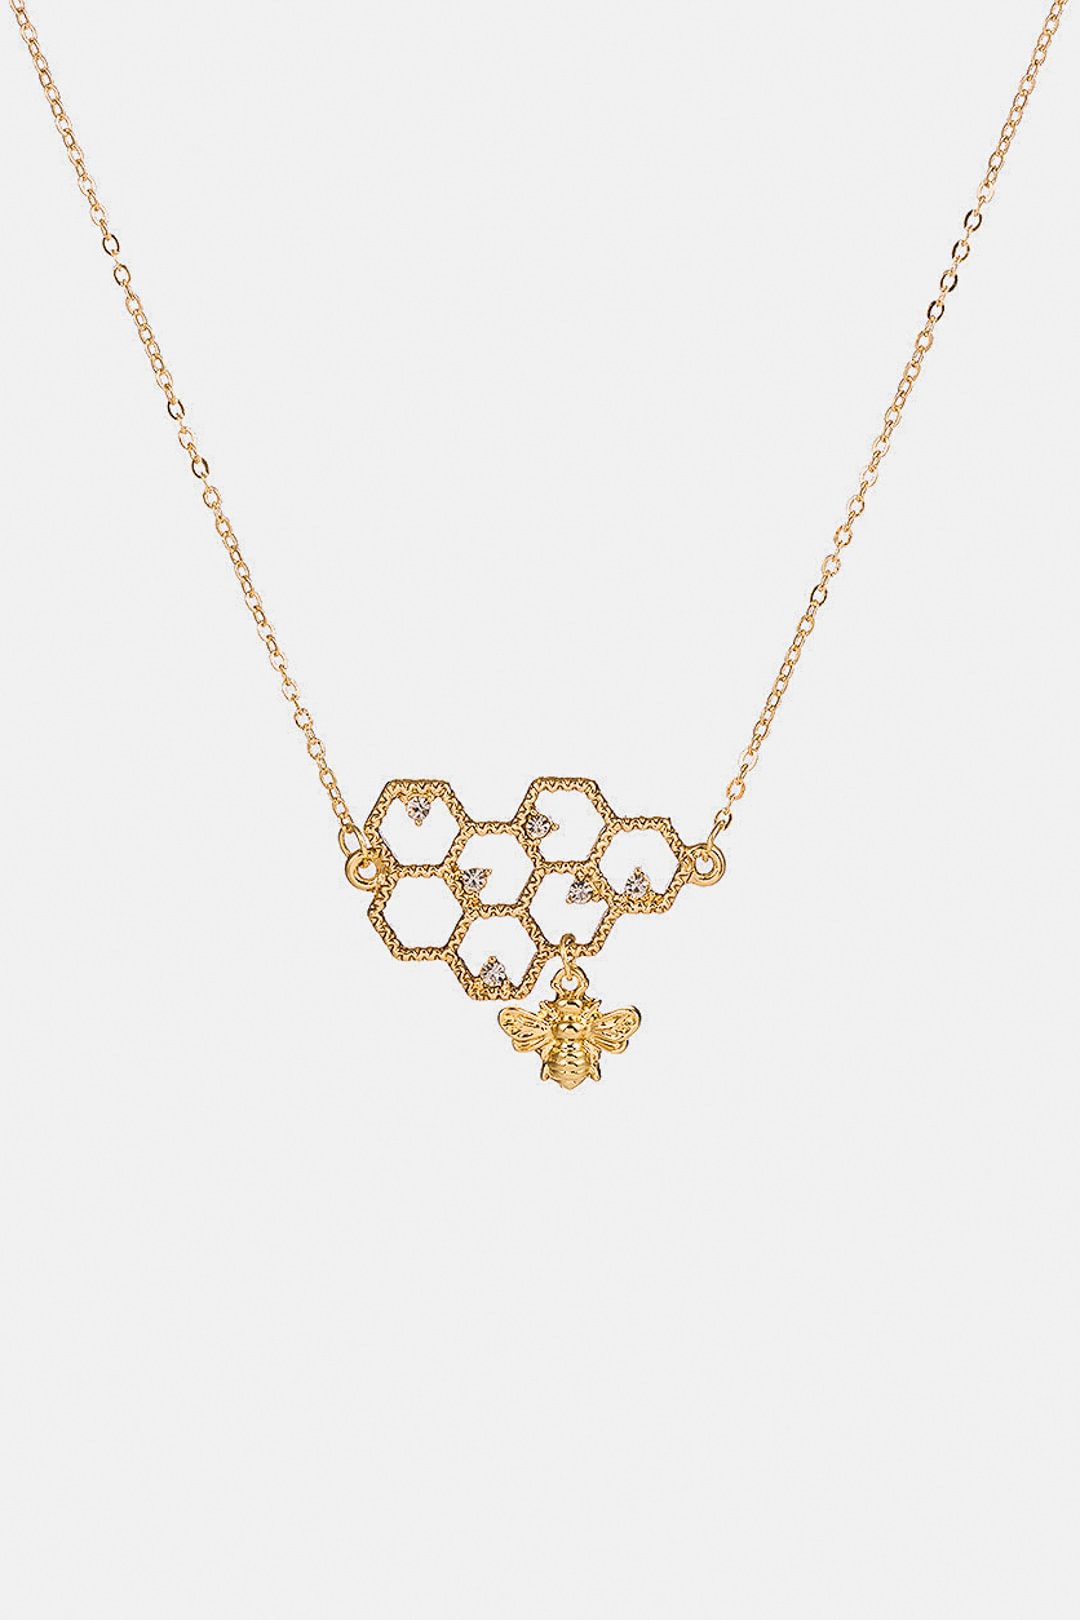 FashionV-FashionV Honeycomb Diamond Necklace